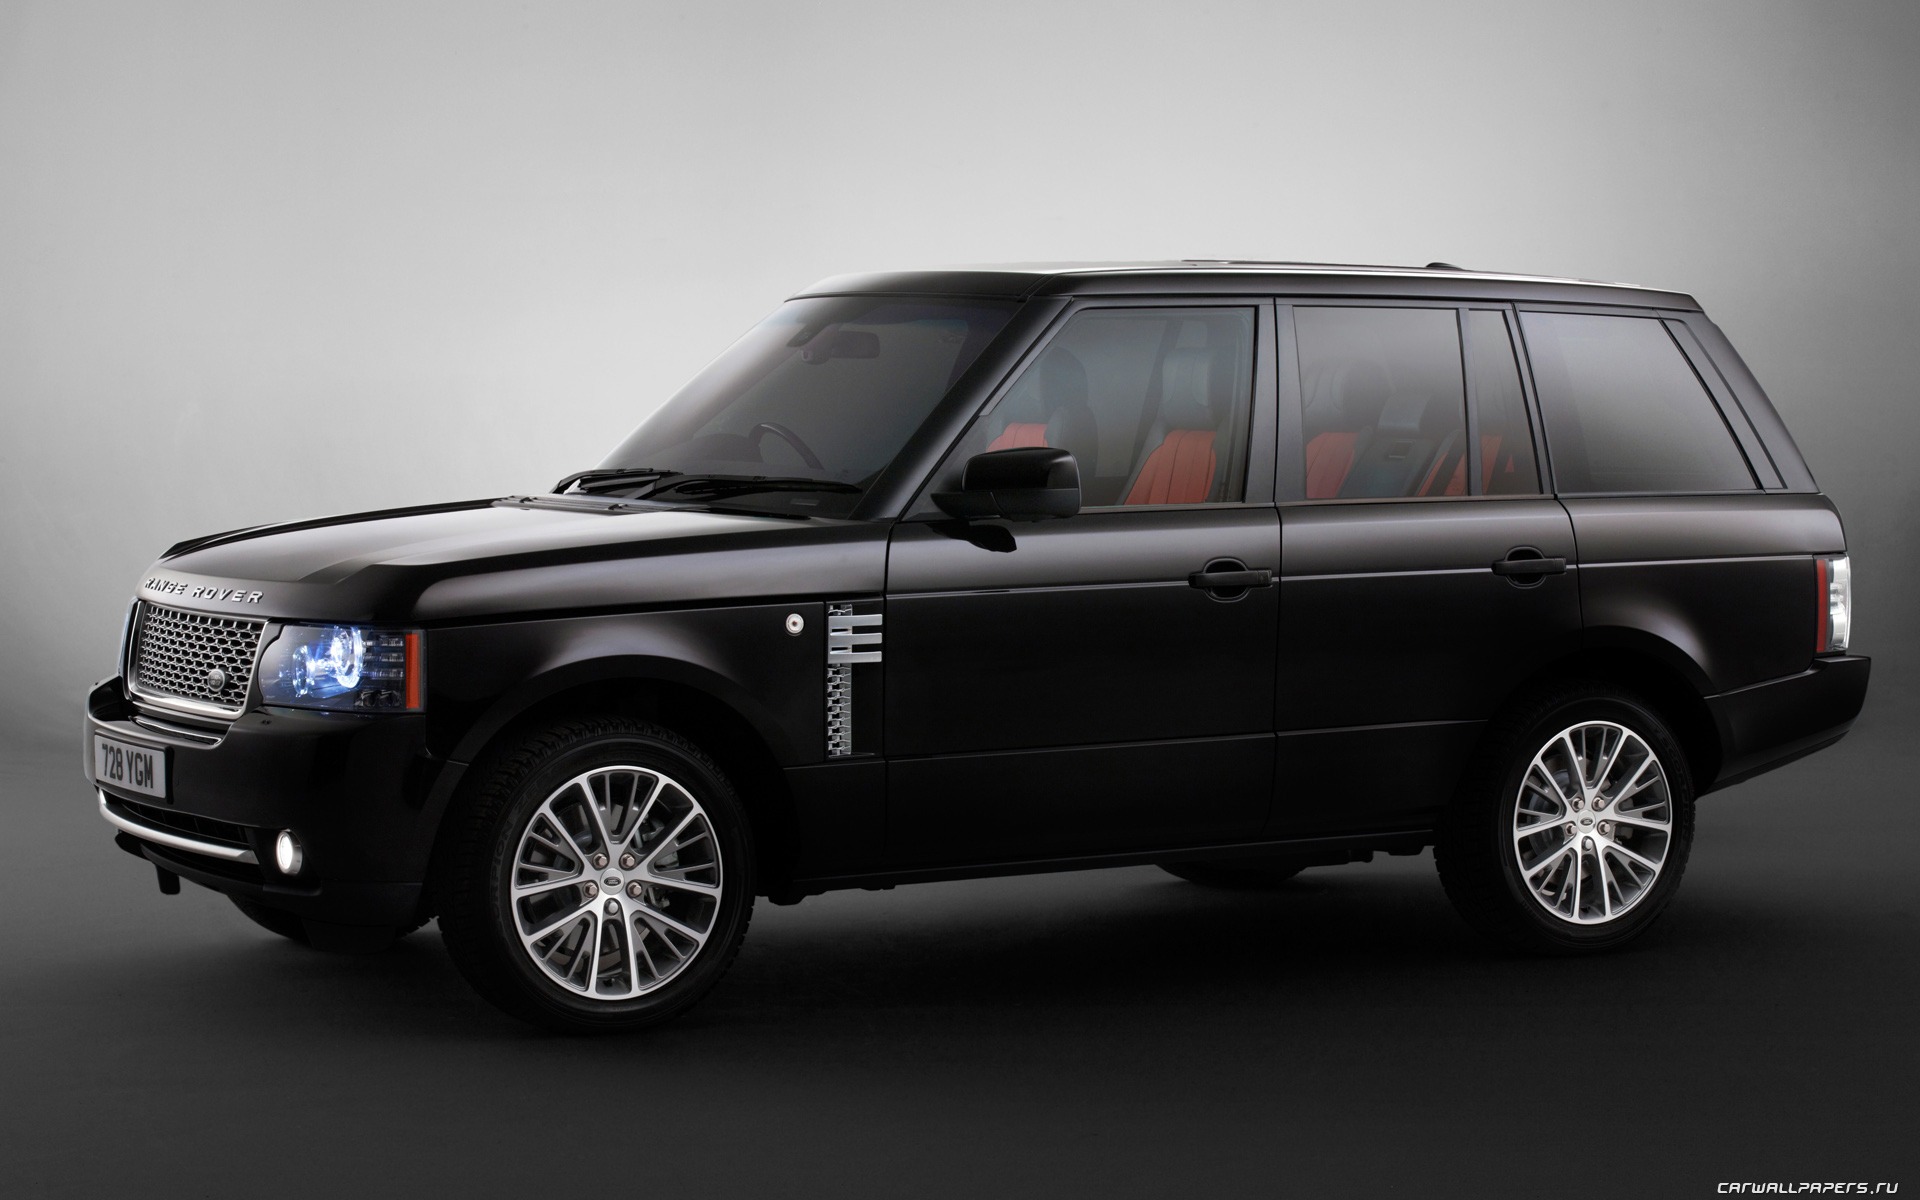 Land Rover Range Rover Black Edition - 2011 路虎17 - 1920x1200